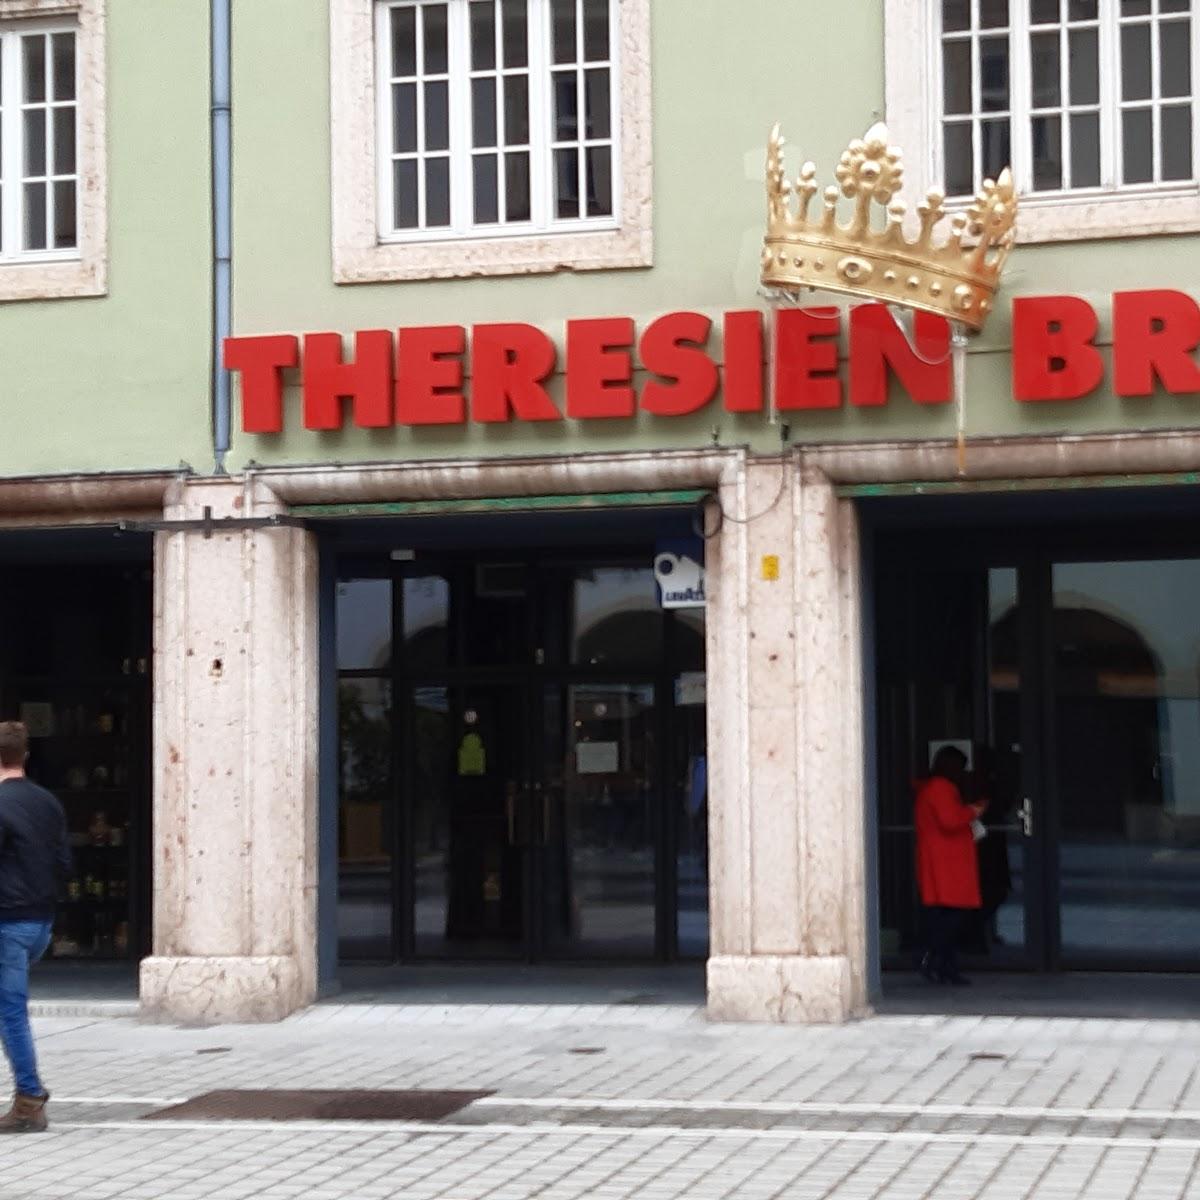 Restaurant "Theresienbräu" in Innsbruck